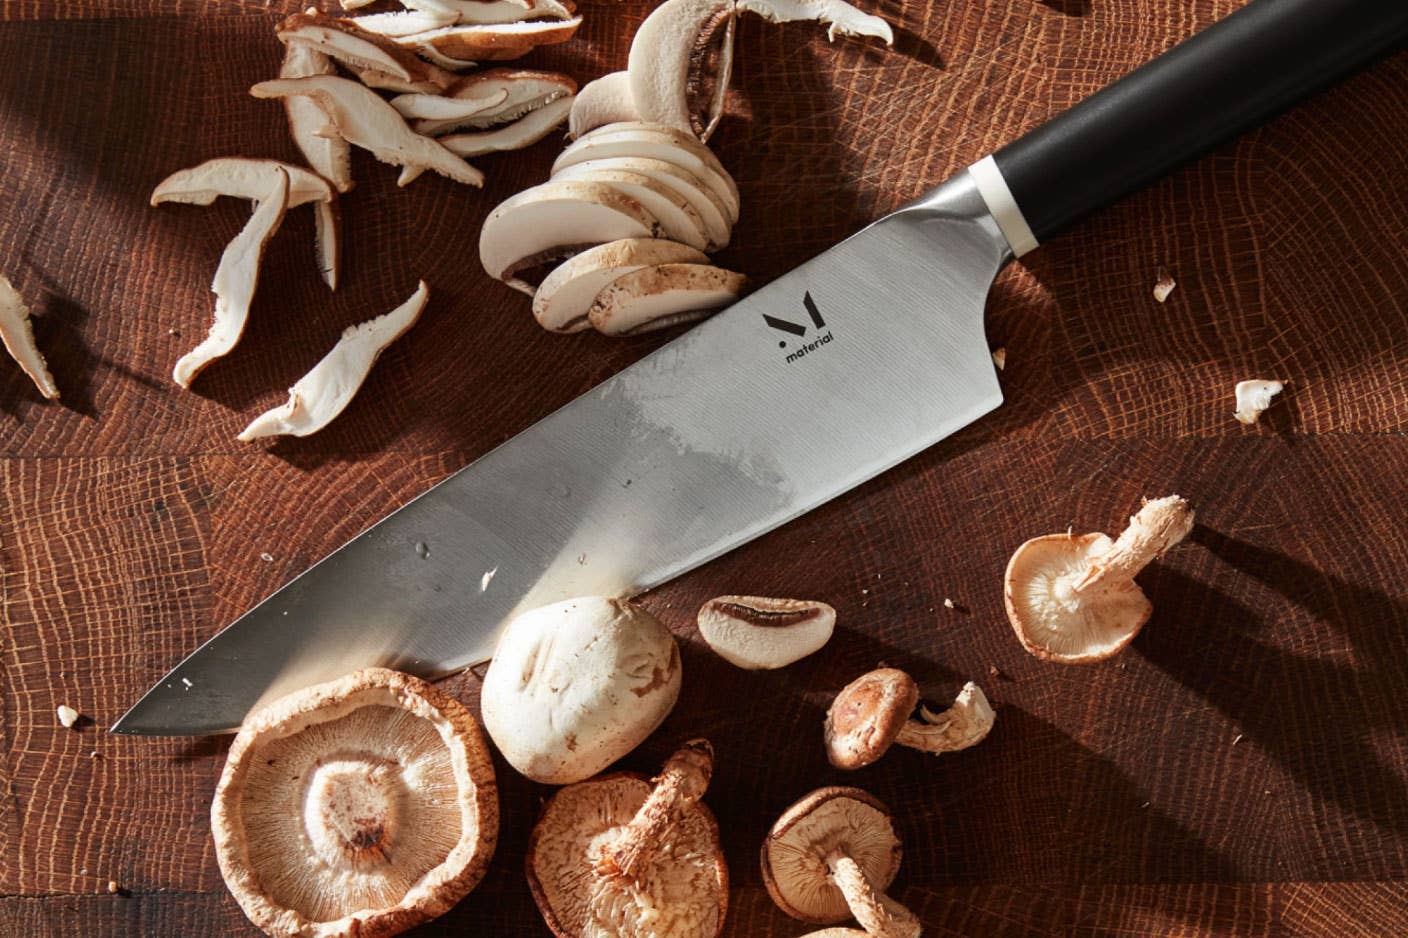 High-quality kitchen knife